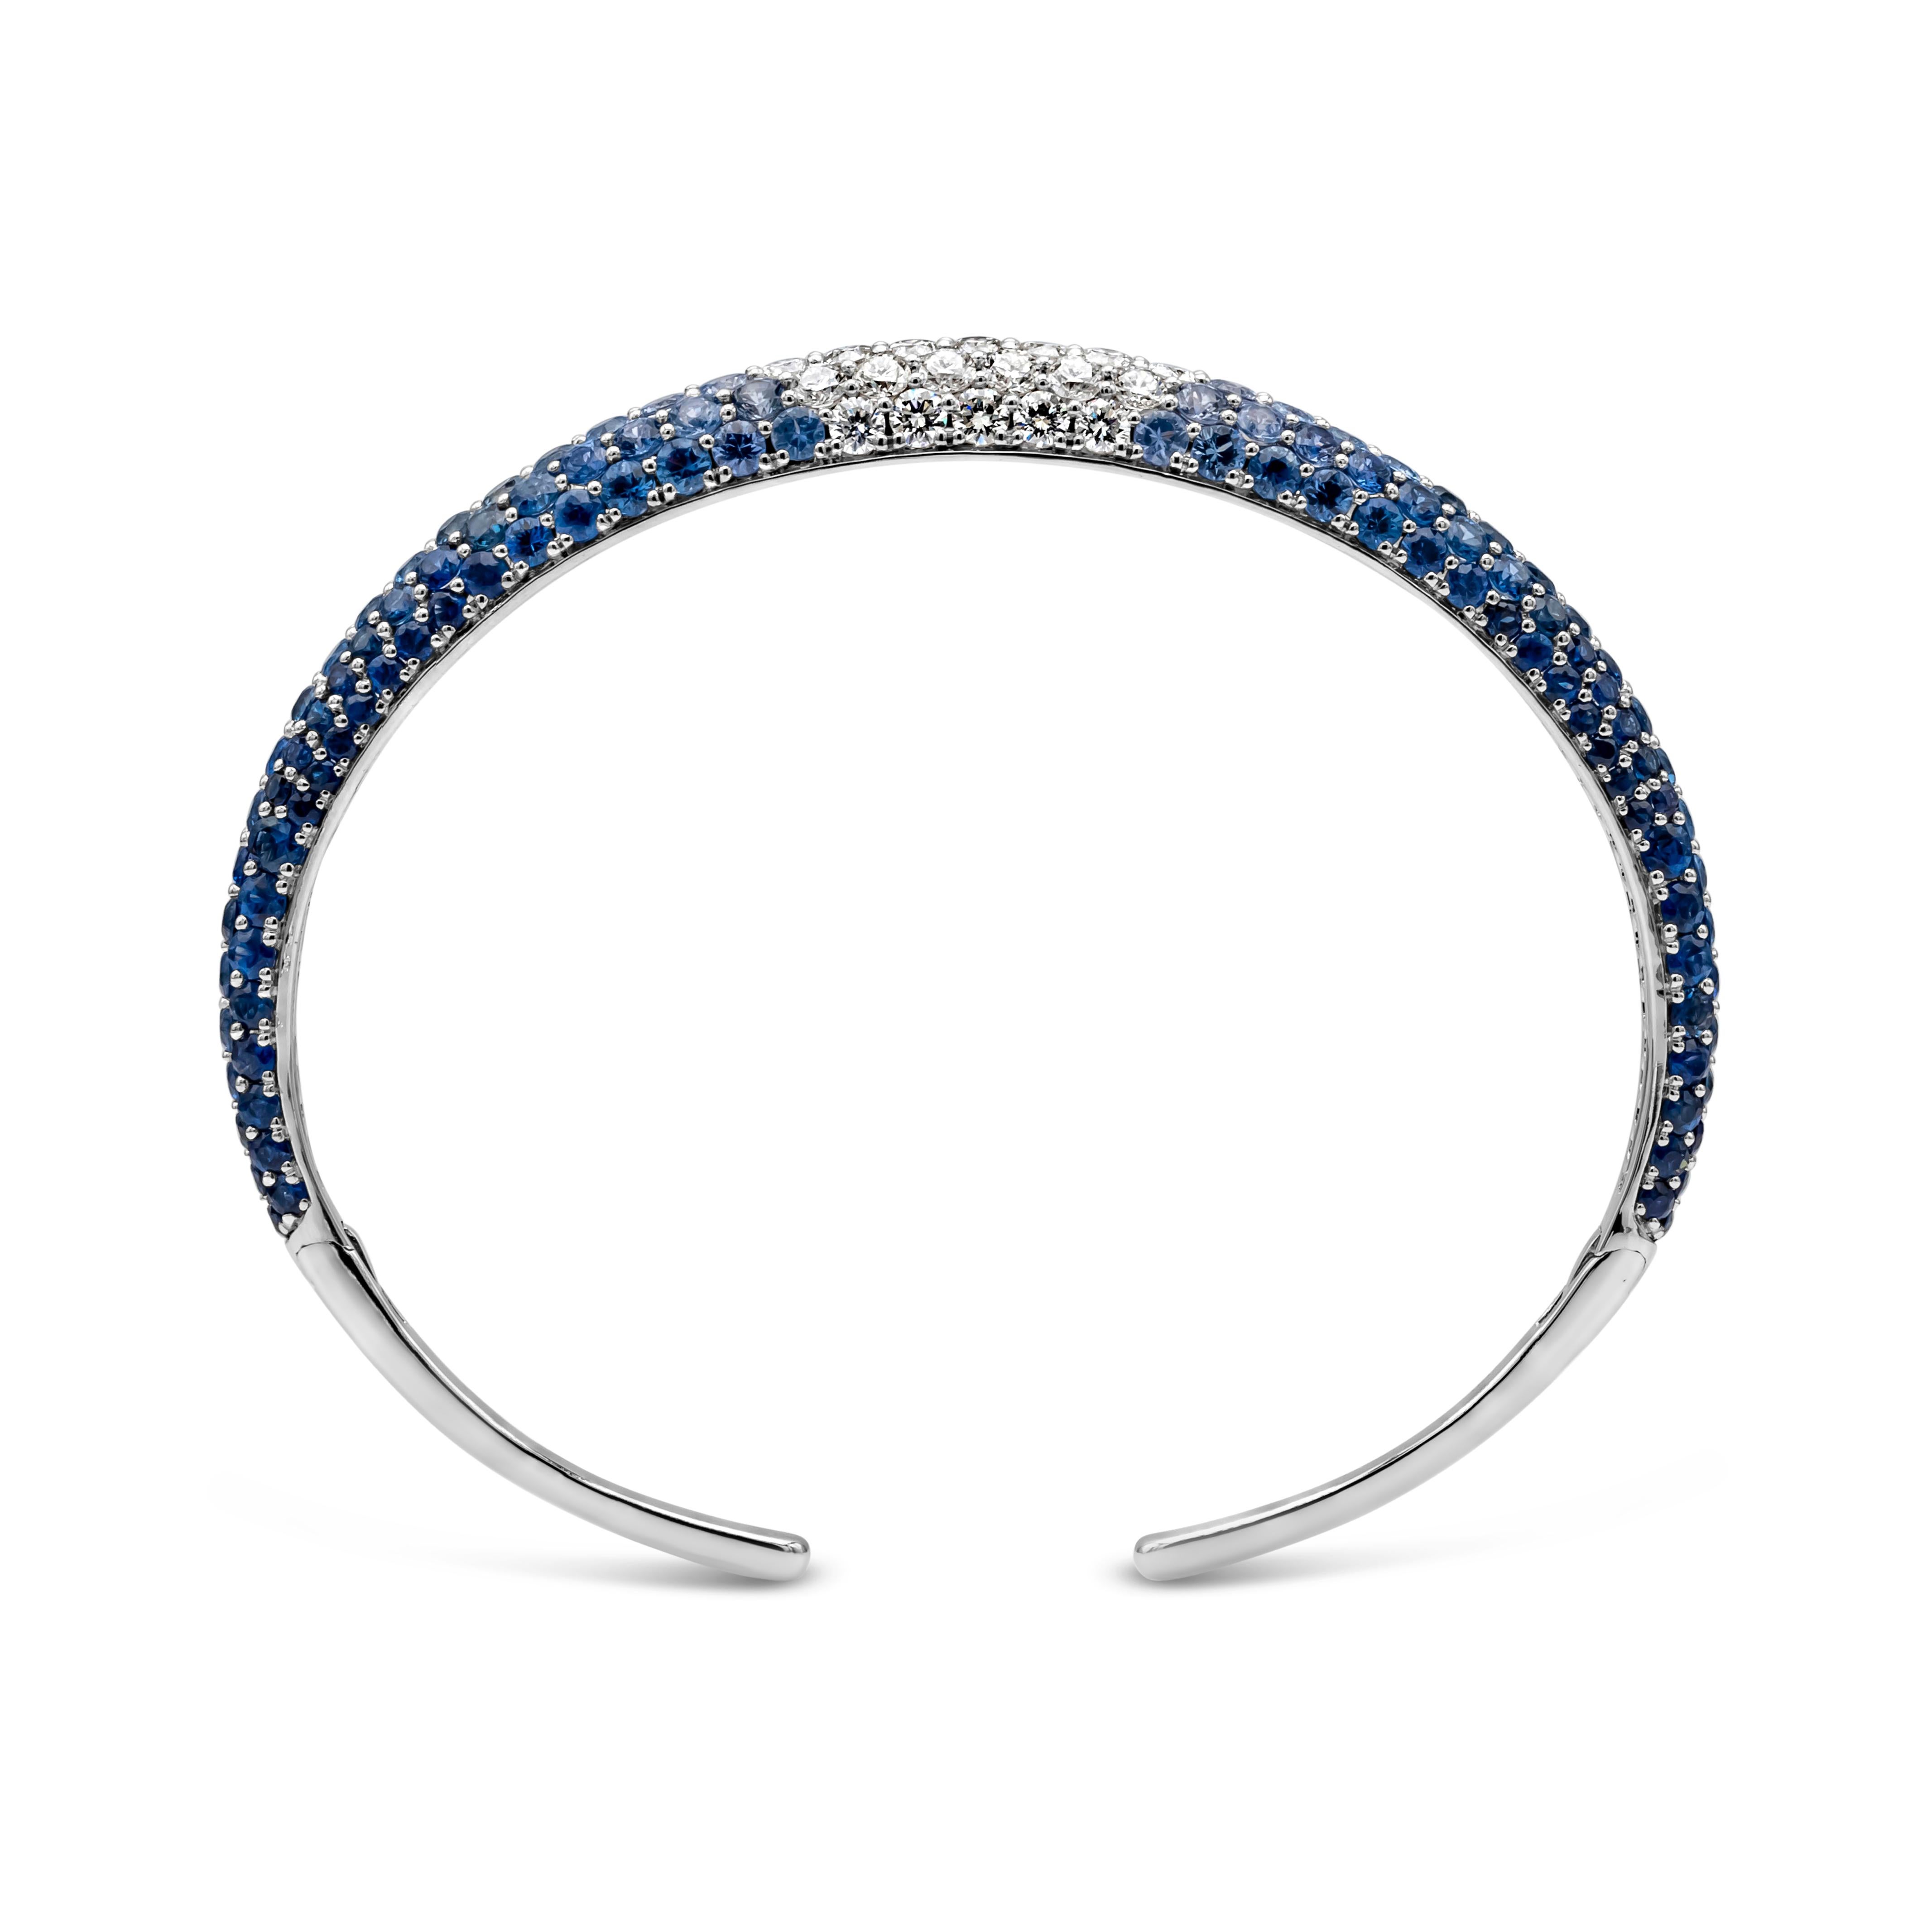 Roman Malakov 10.05 Carats Round Cut Sapphire & Diamond 18K Cuff Bangle Bracelet In New Condition For Sale In New York, NY